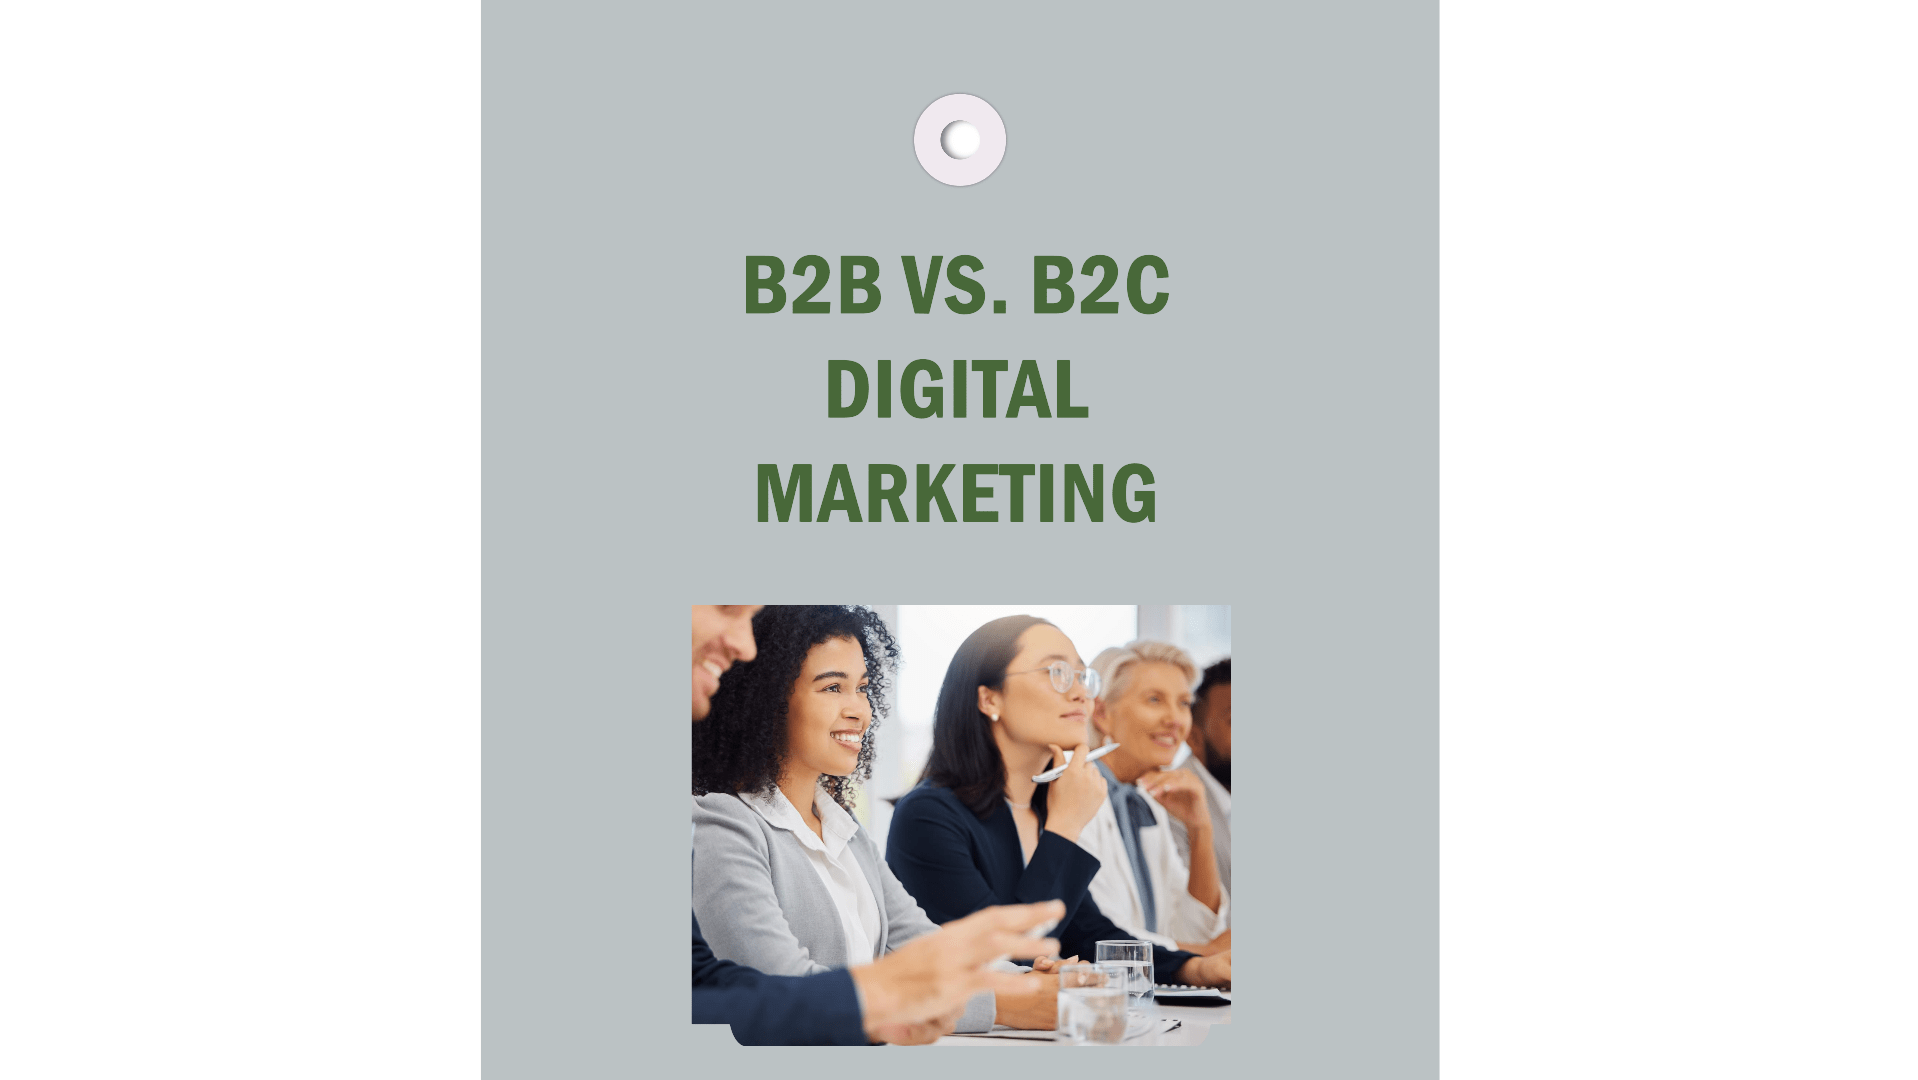 Digital Marketing Strategies for B2B vs. B2C